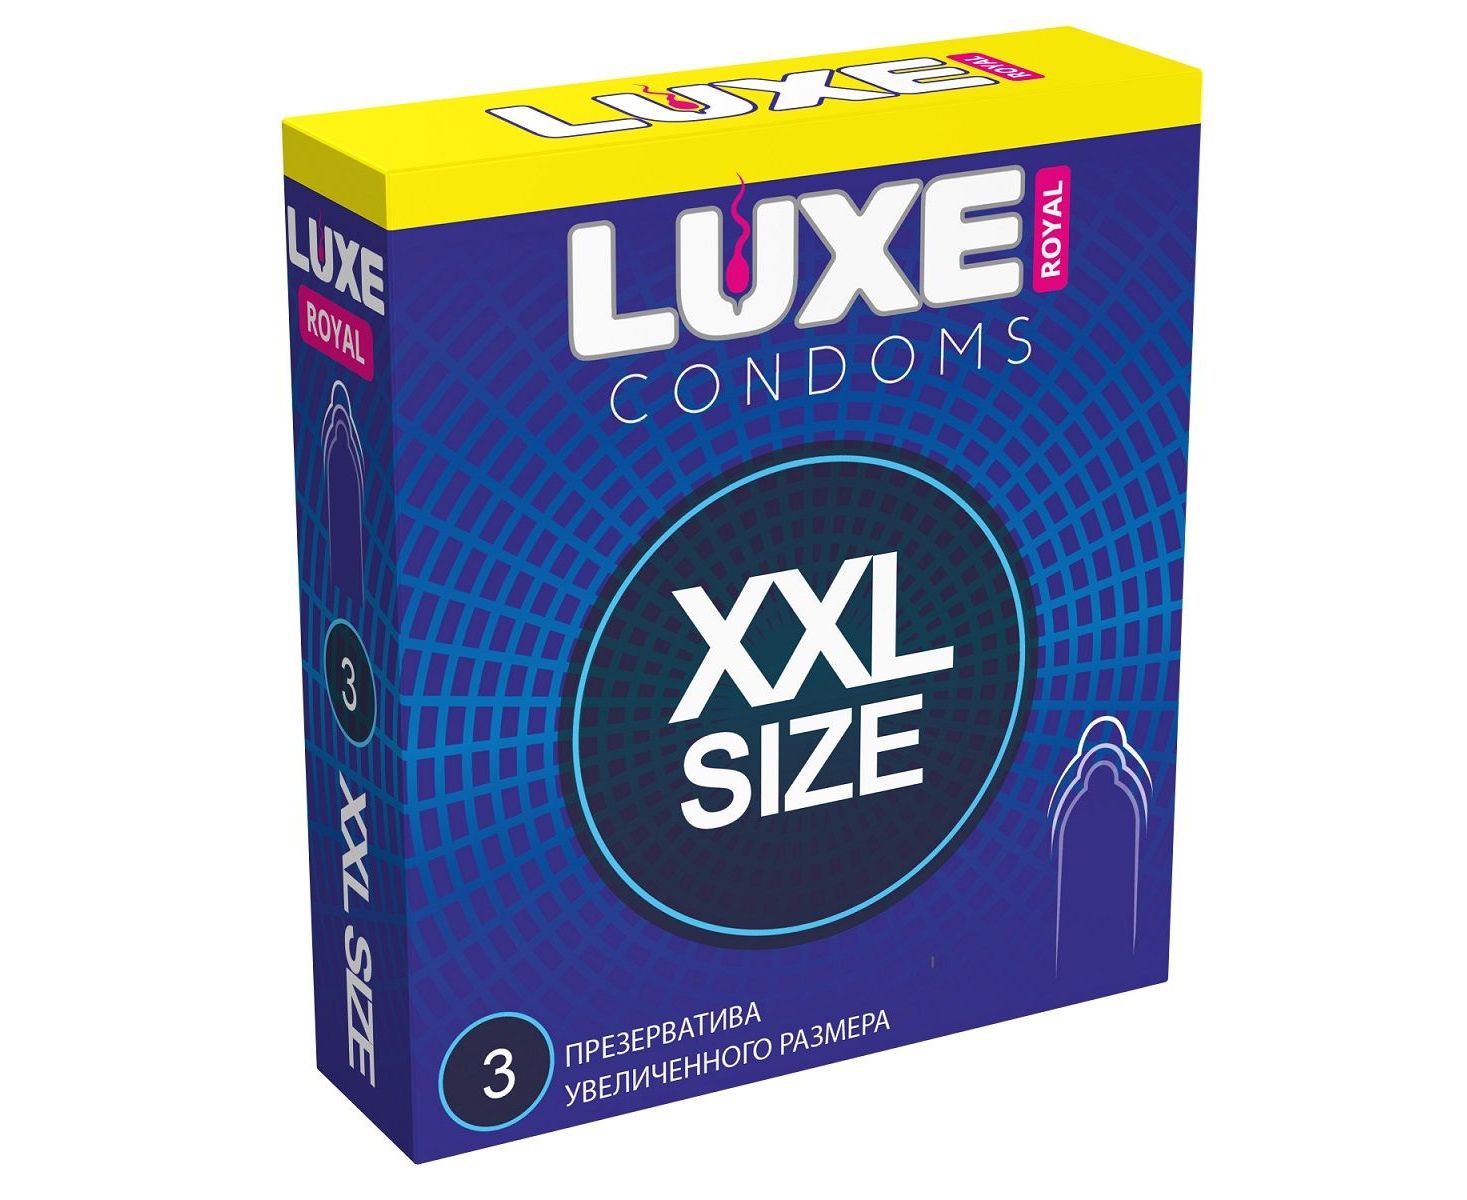 презервативы luxe royal xxl size увеличенного размера